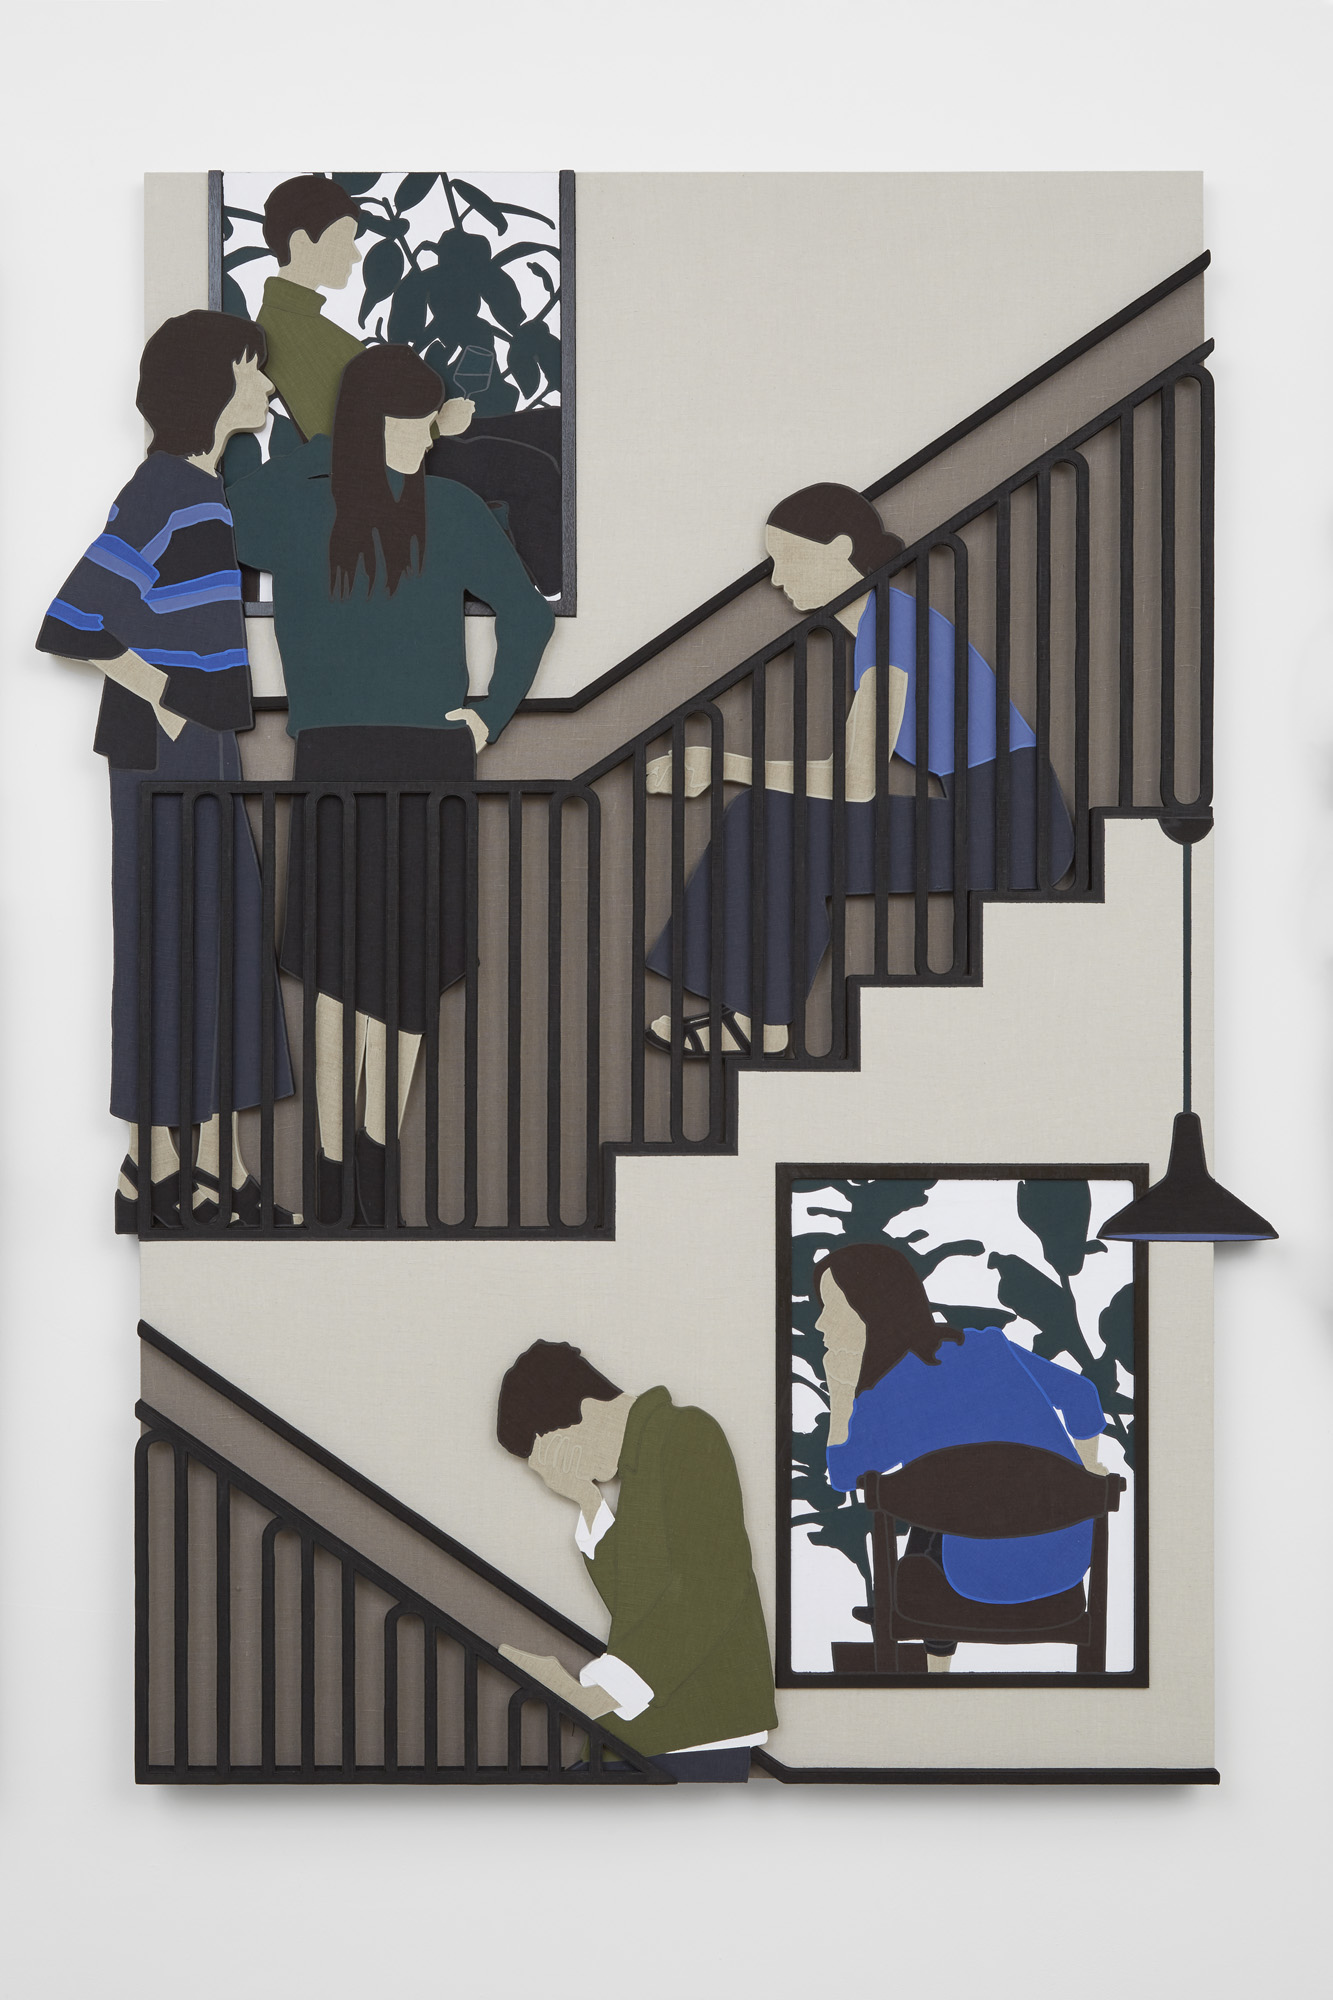  Lauren Keeley,&nbsp; Halfway Up ,&nbsp;2017,&nbsp;Acrylic, linen and stained walnut on boards,&nbsp;184 x 127 cm 